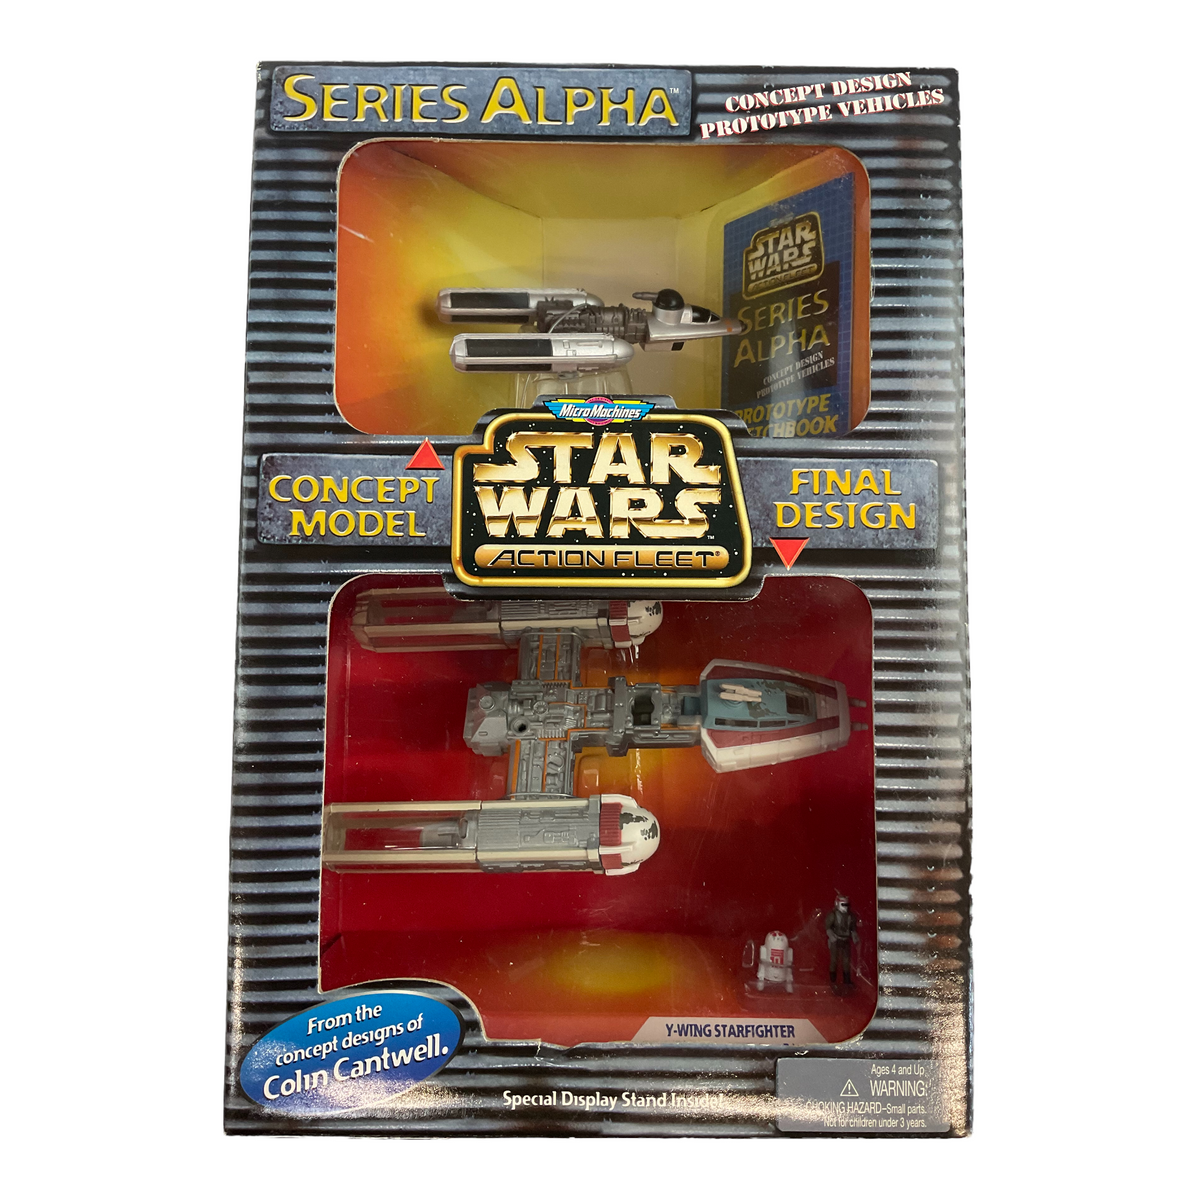 Star Wars Action Fleet Series Alpha Y-wing